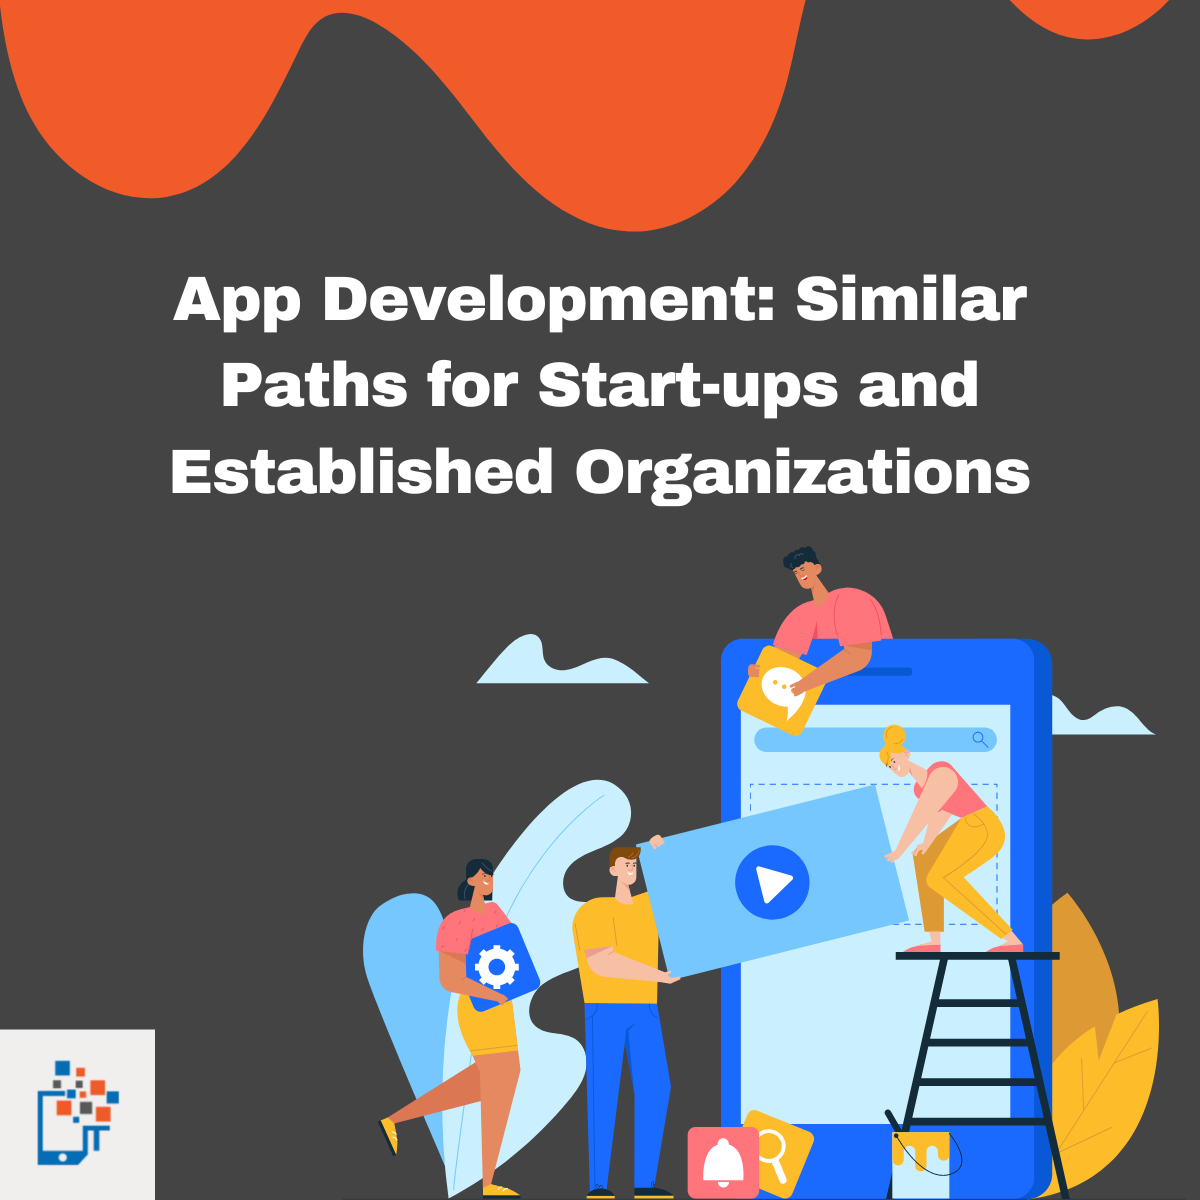 App Development: Similar Paths for Start-ups and Established Organizations